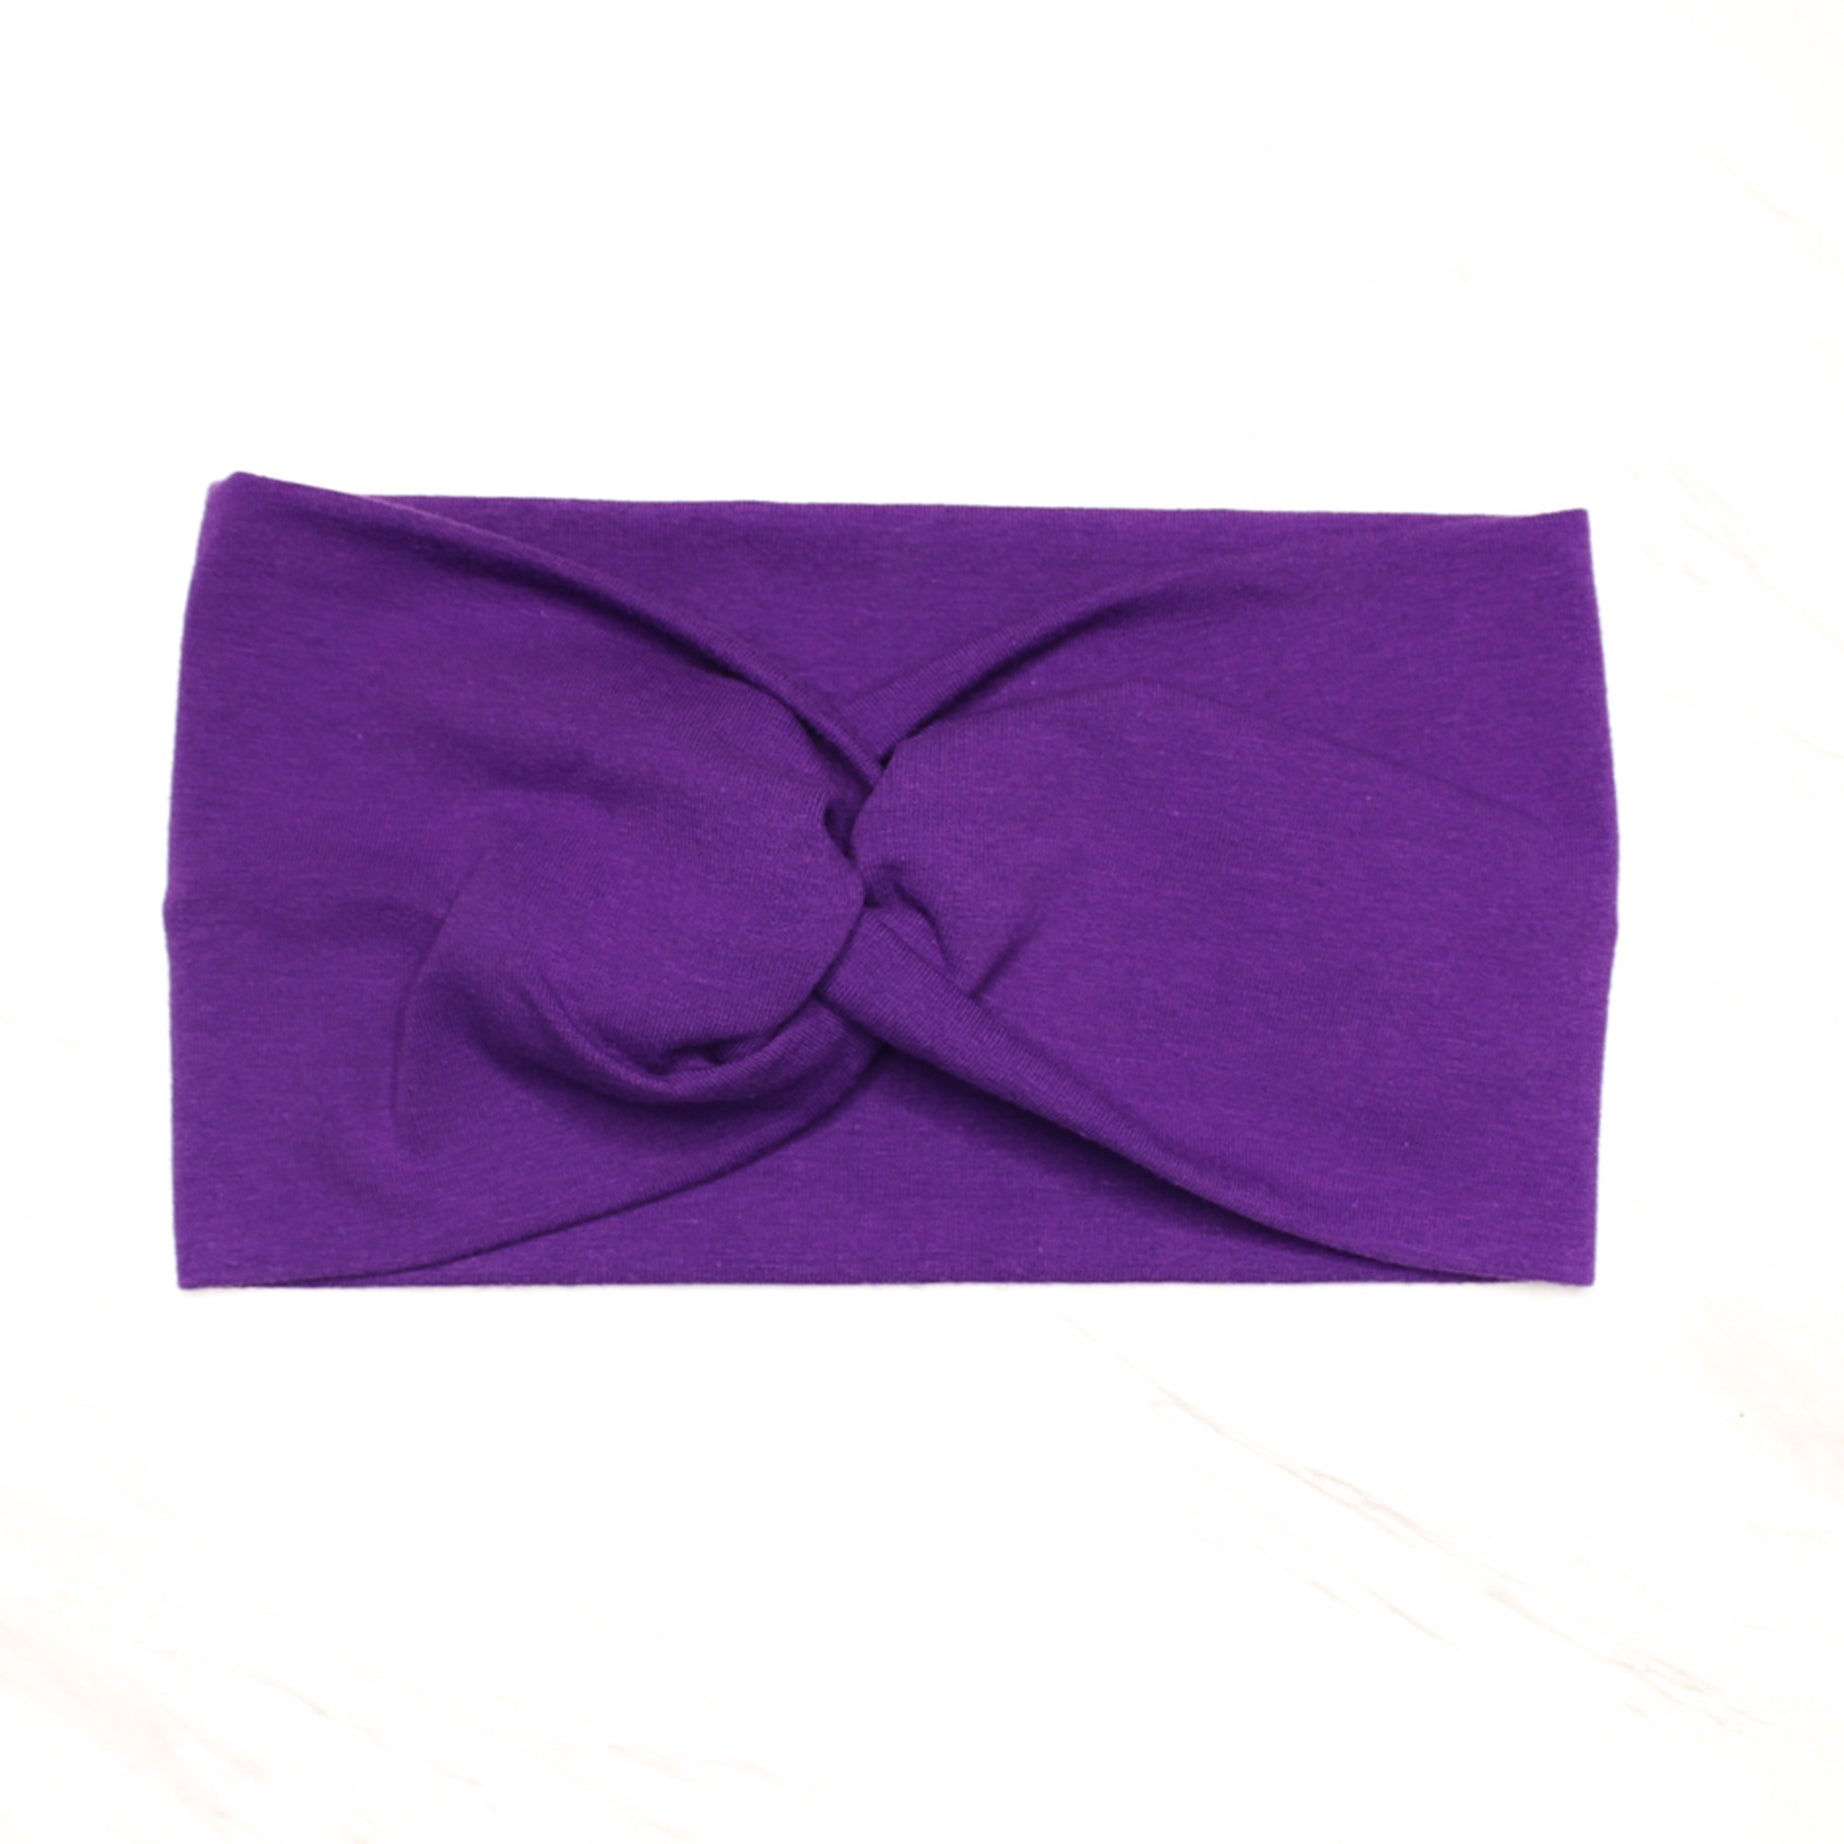 Wide Solid Purple Headband, Cotton Spandex